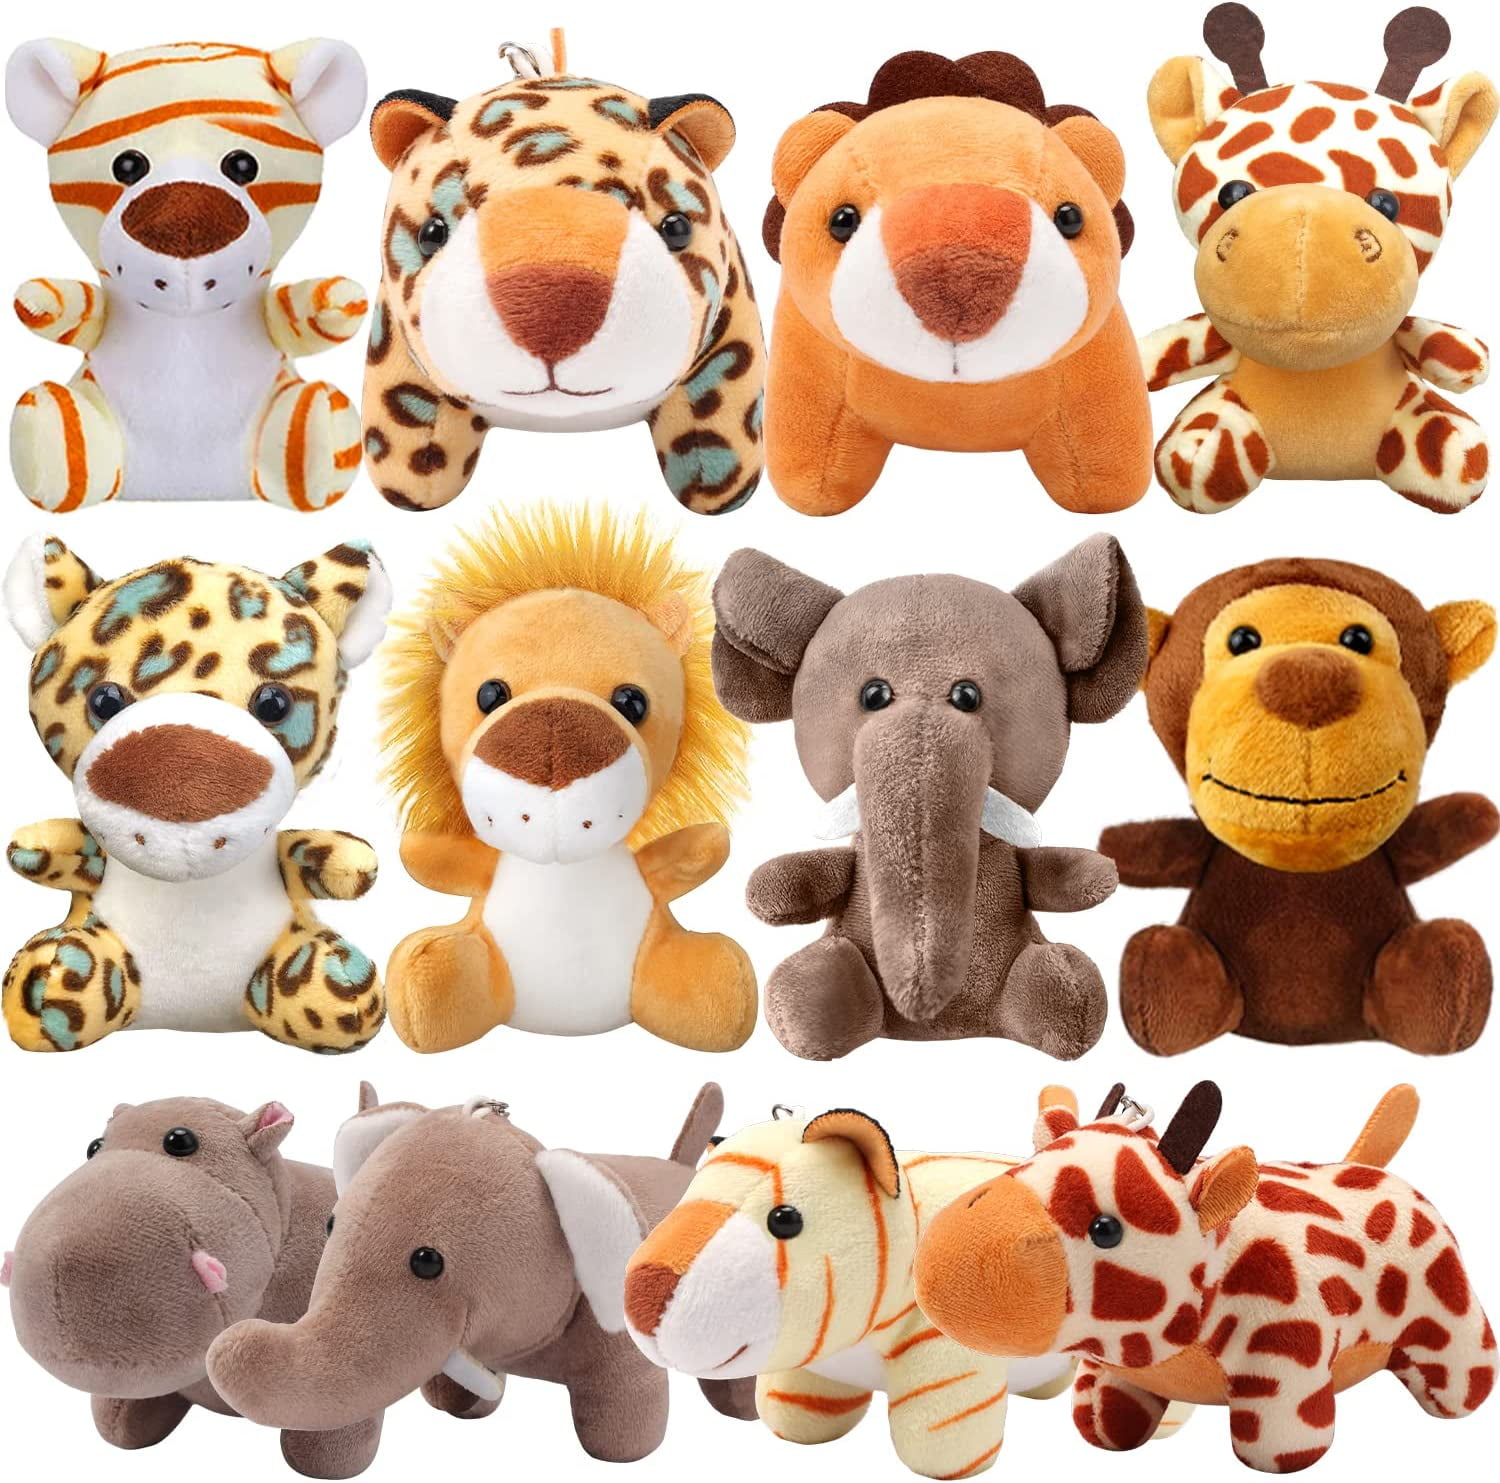 Stuffed Animal Zoo, Stuffed Animal Storage, Toy Storage, Stuffed Animal  Holder, Personalized Animal Zoo, Custom Childrens Room Decor 